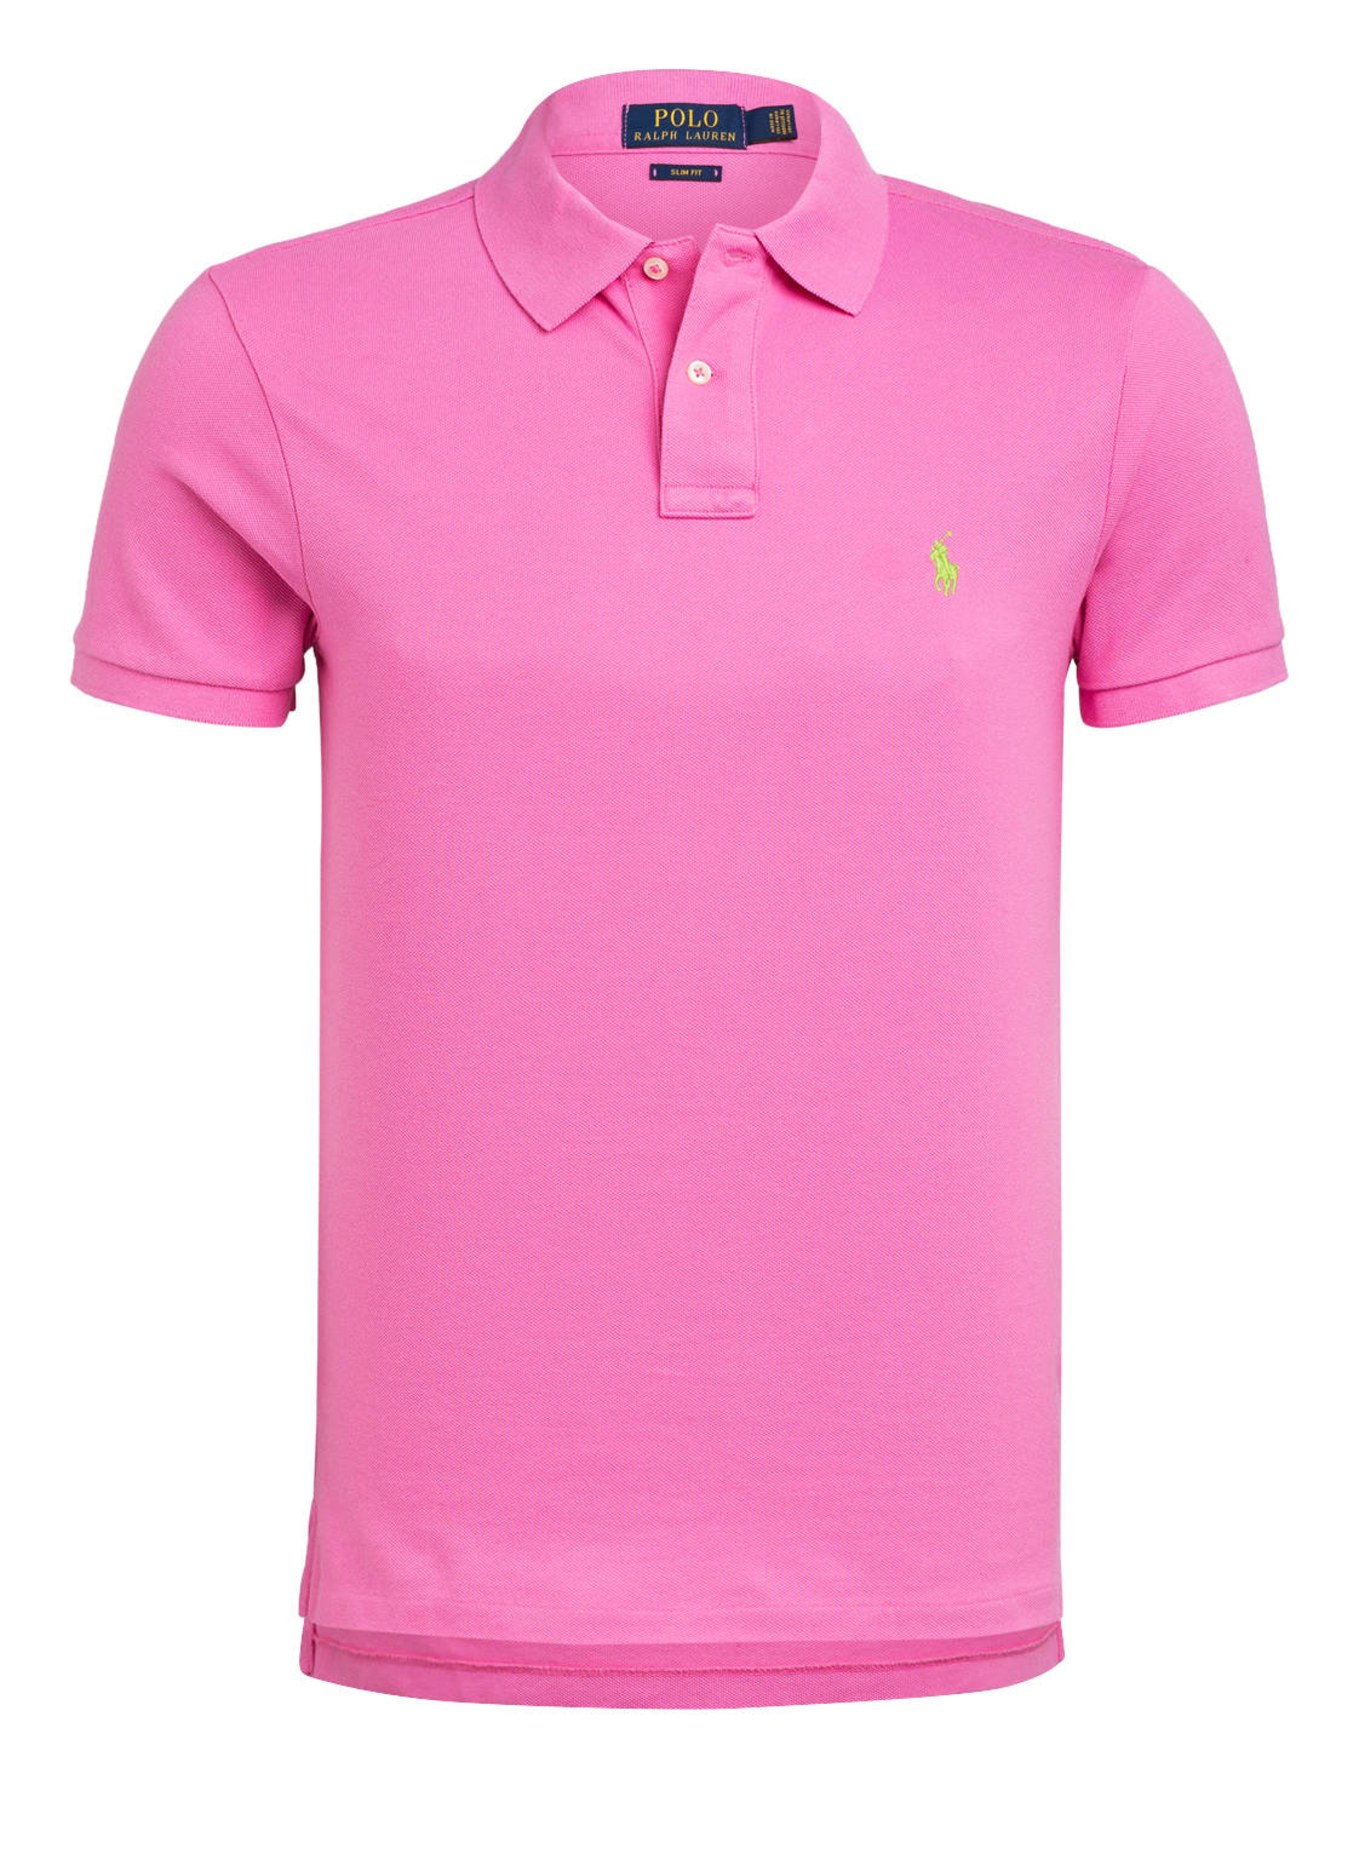 POLO RALPH LAUREN Piqué-Poloshirt Slim Fit, Farbe: PINK (Bild 1)